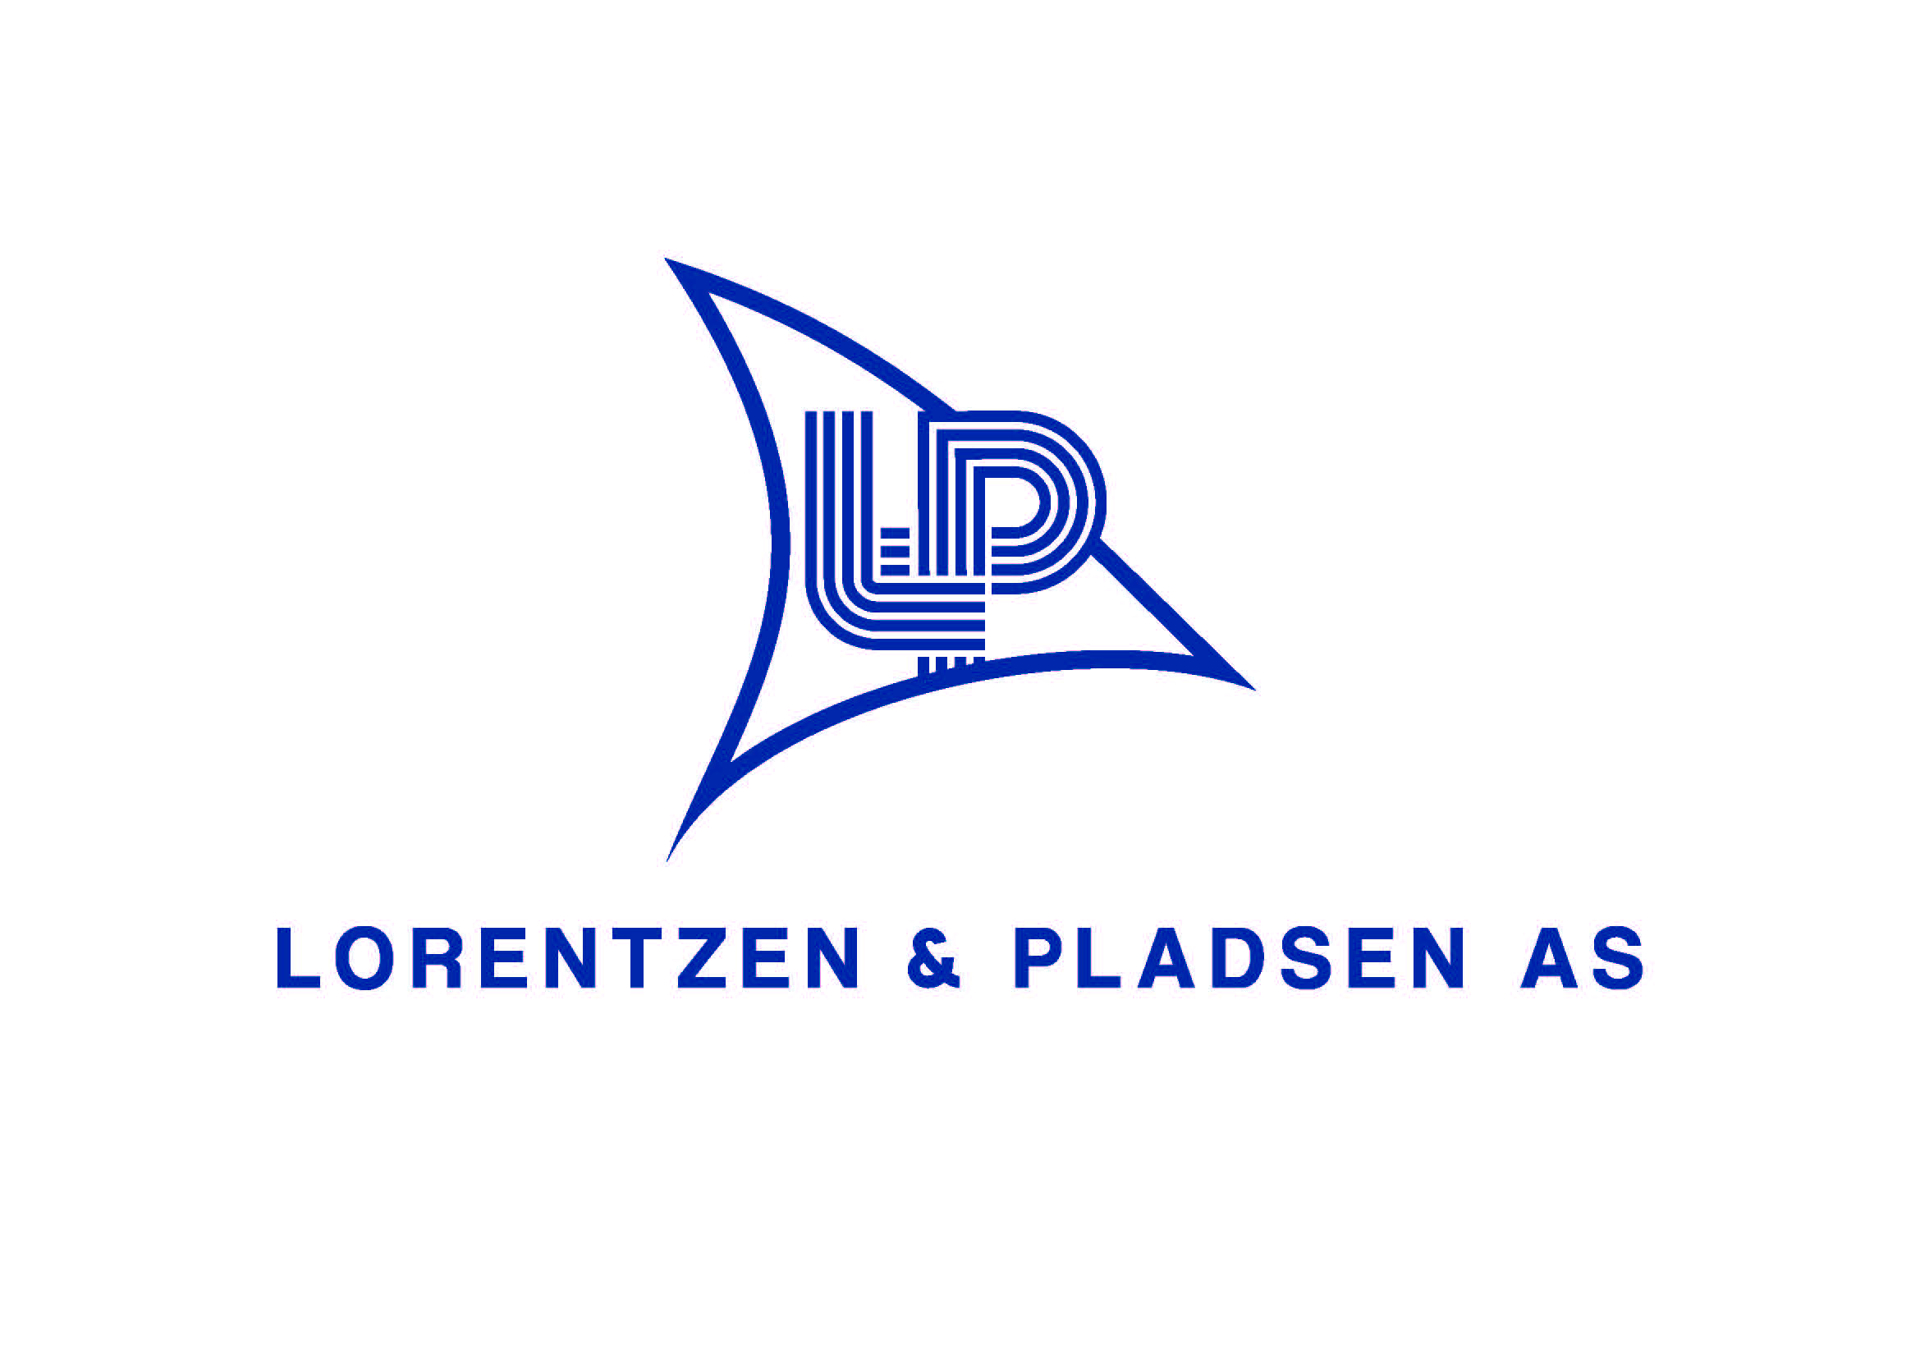 Lorentzen & Pladsen AS